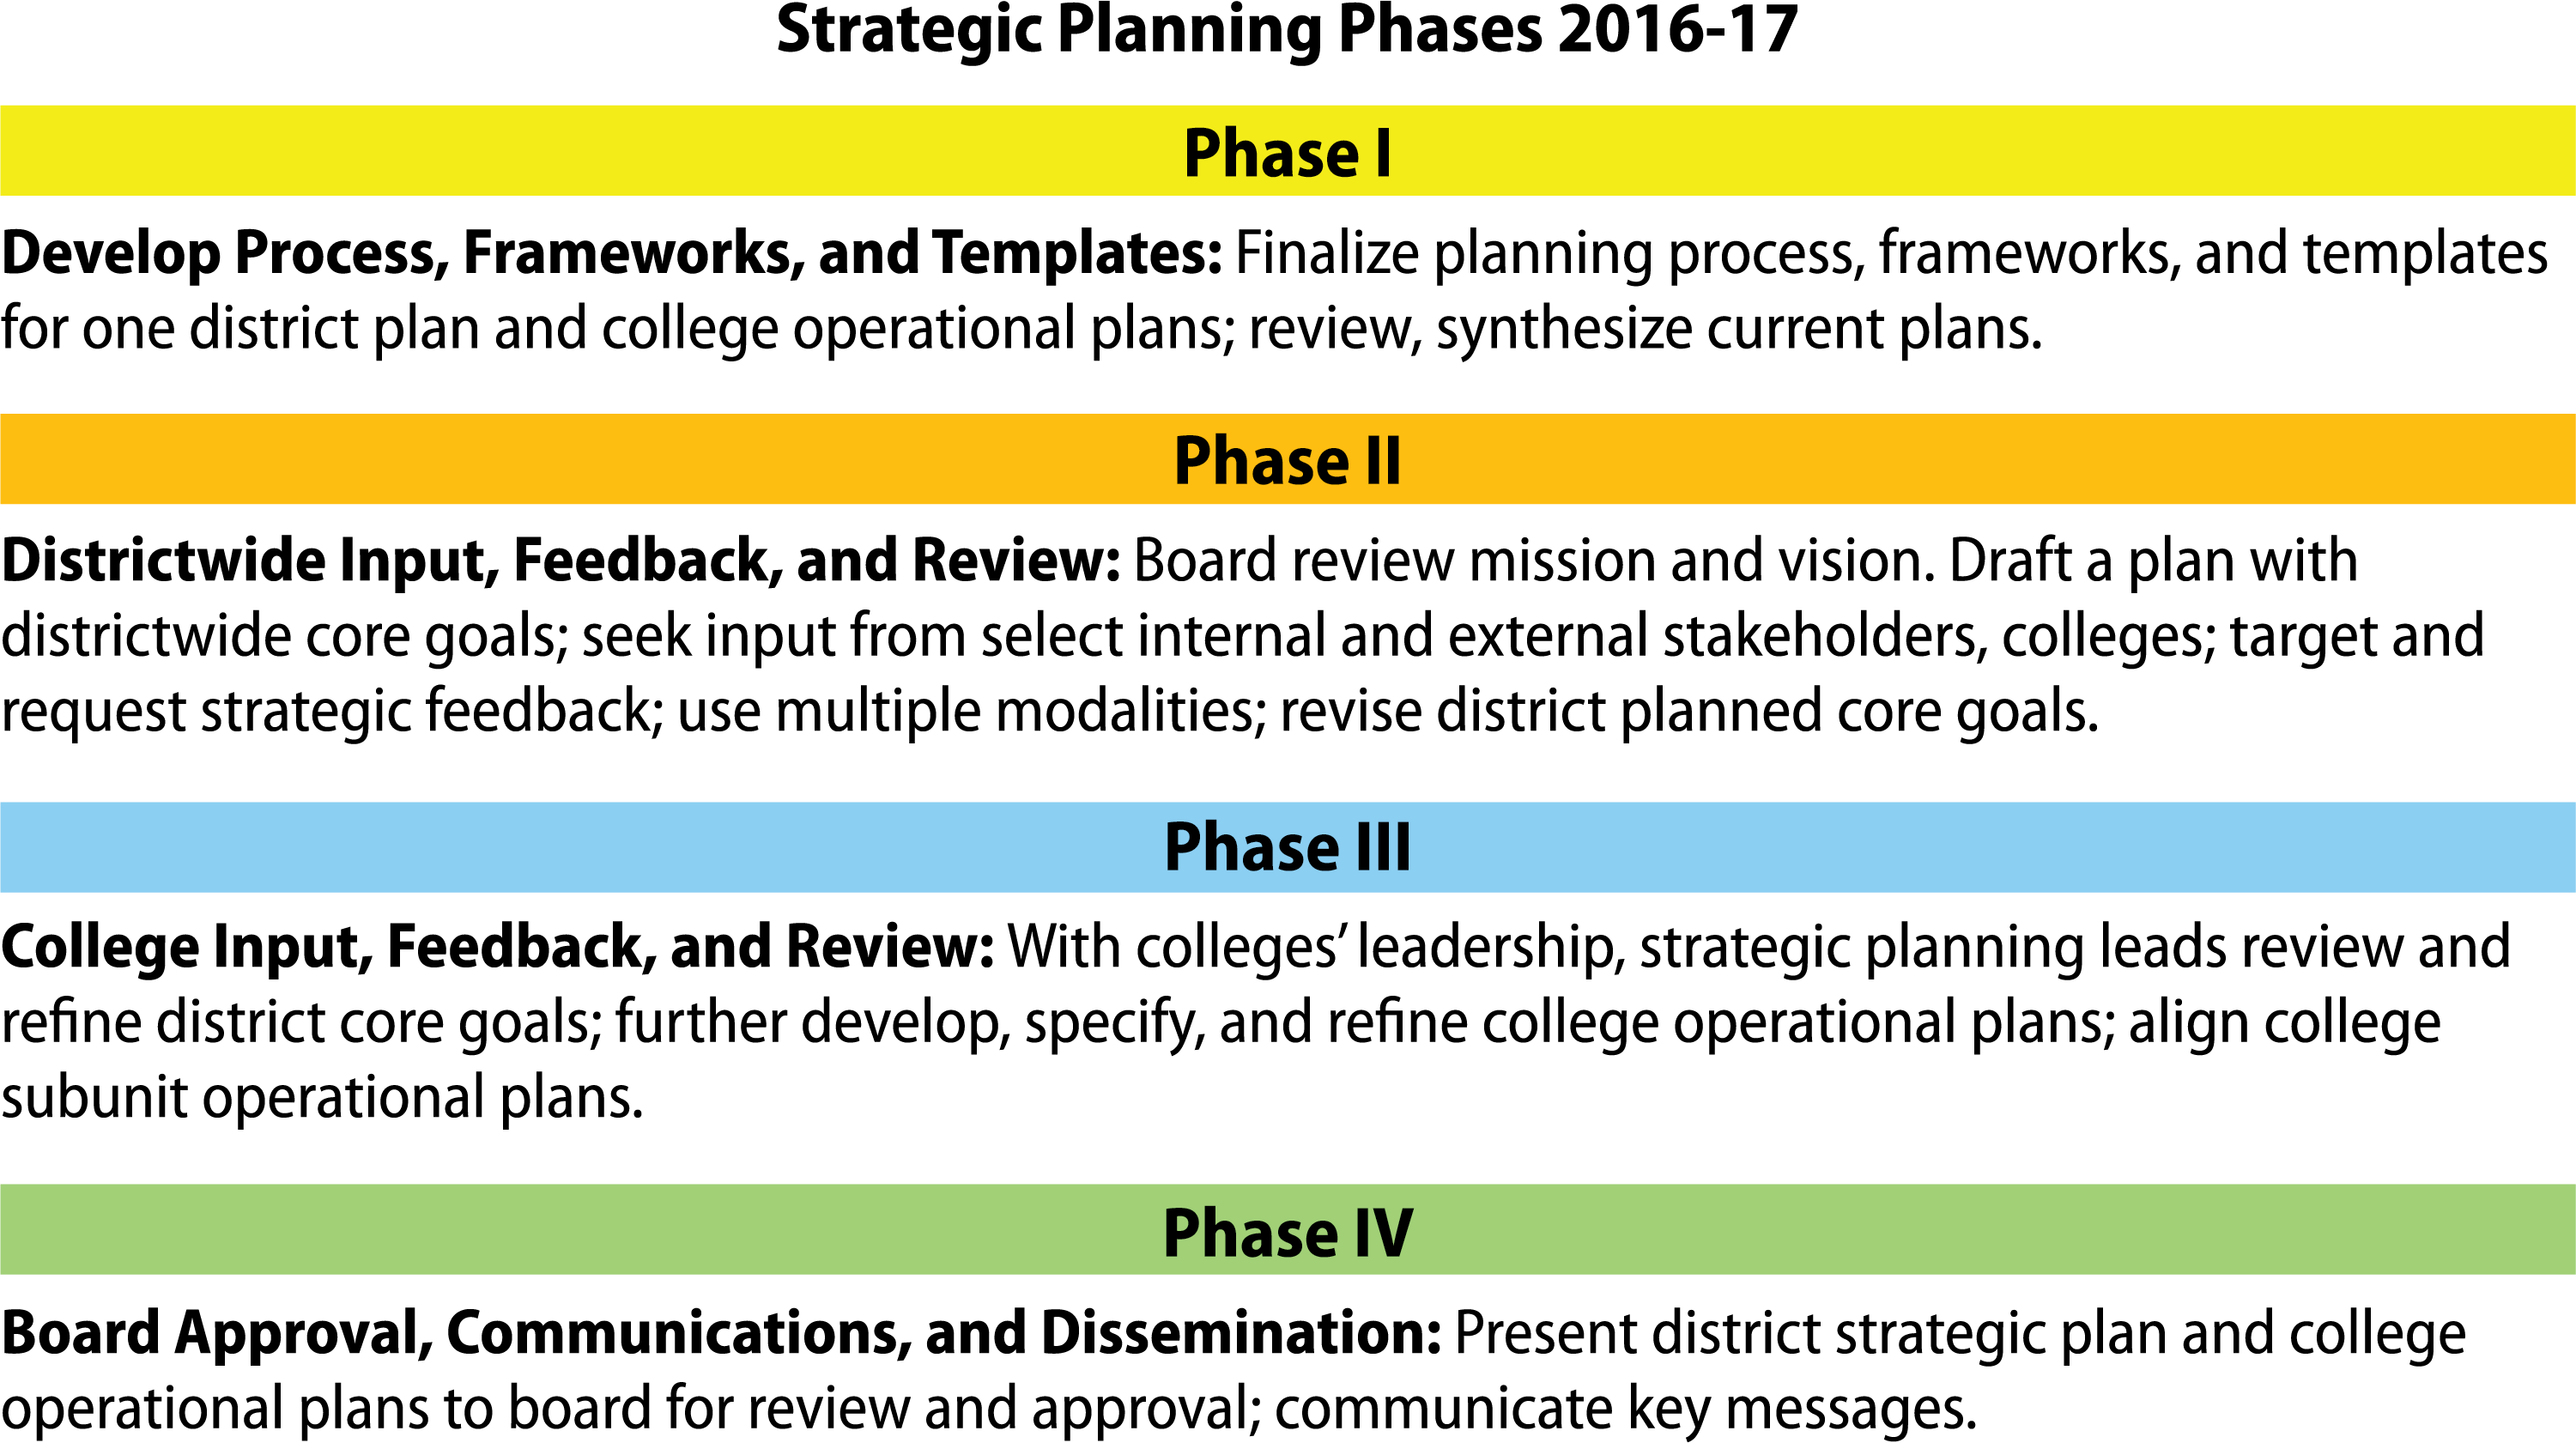 Strategic Planning phases 2016-17 graphic